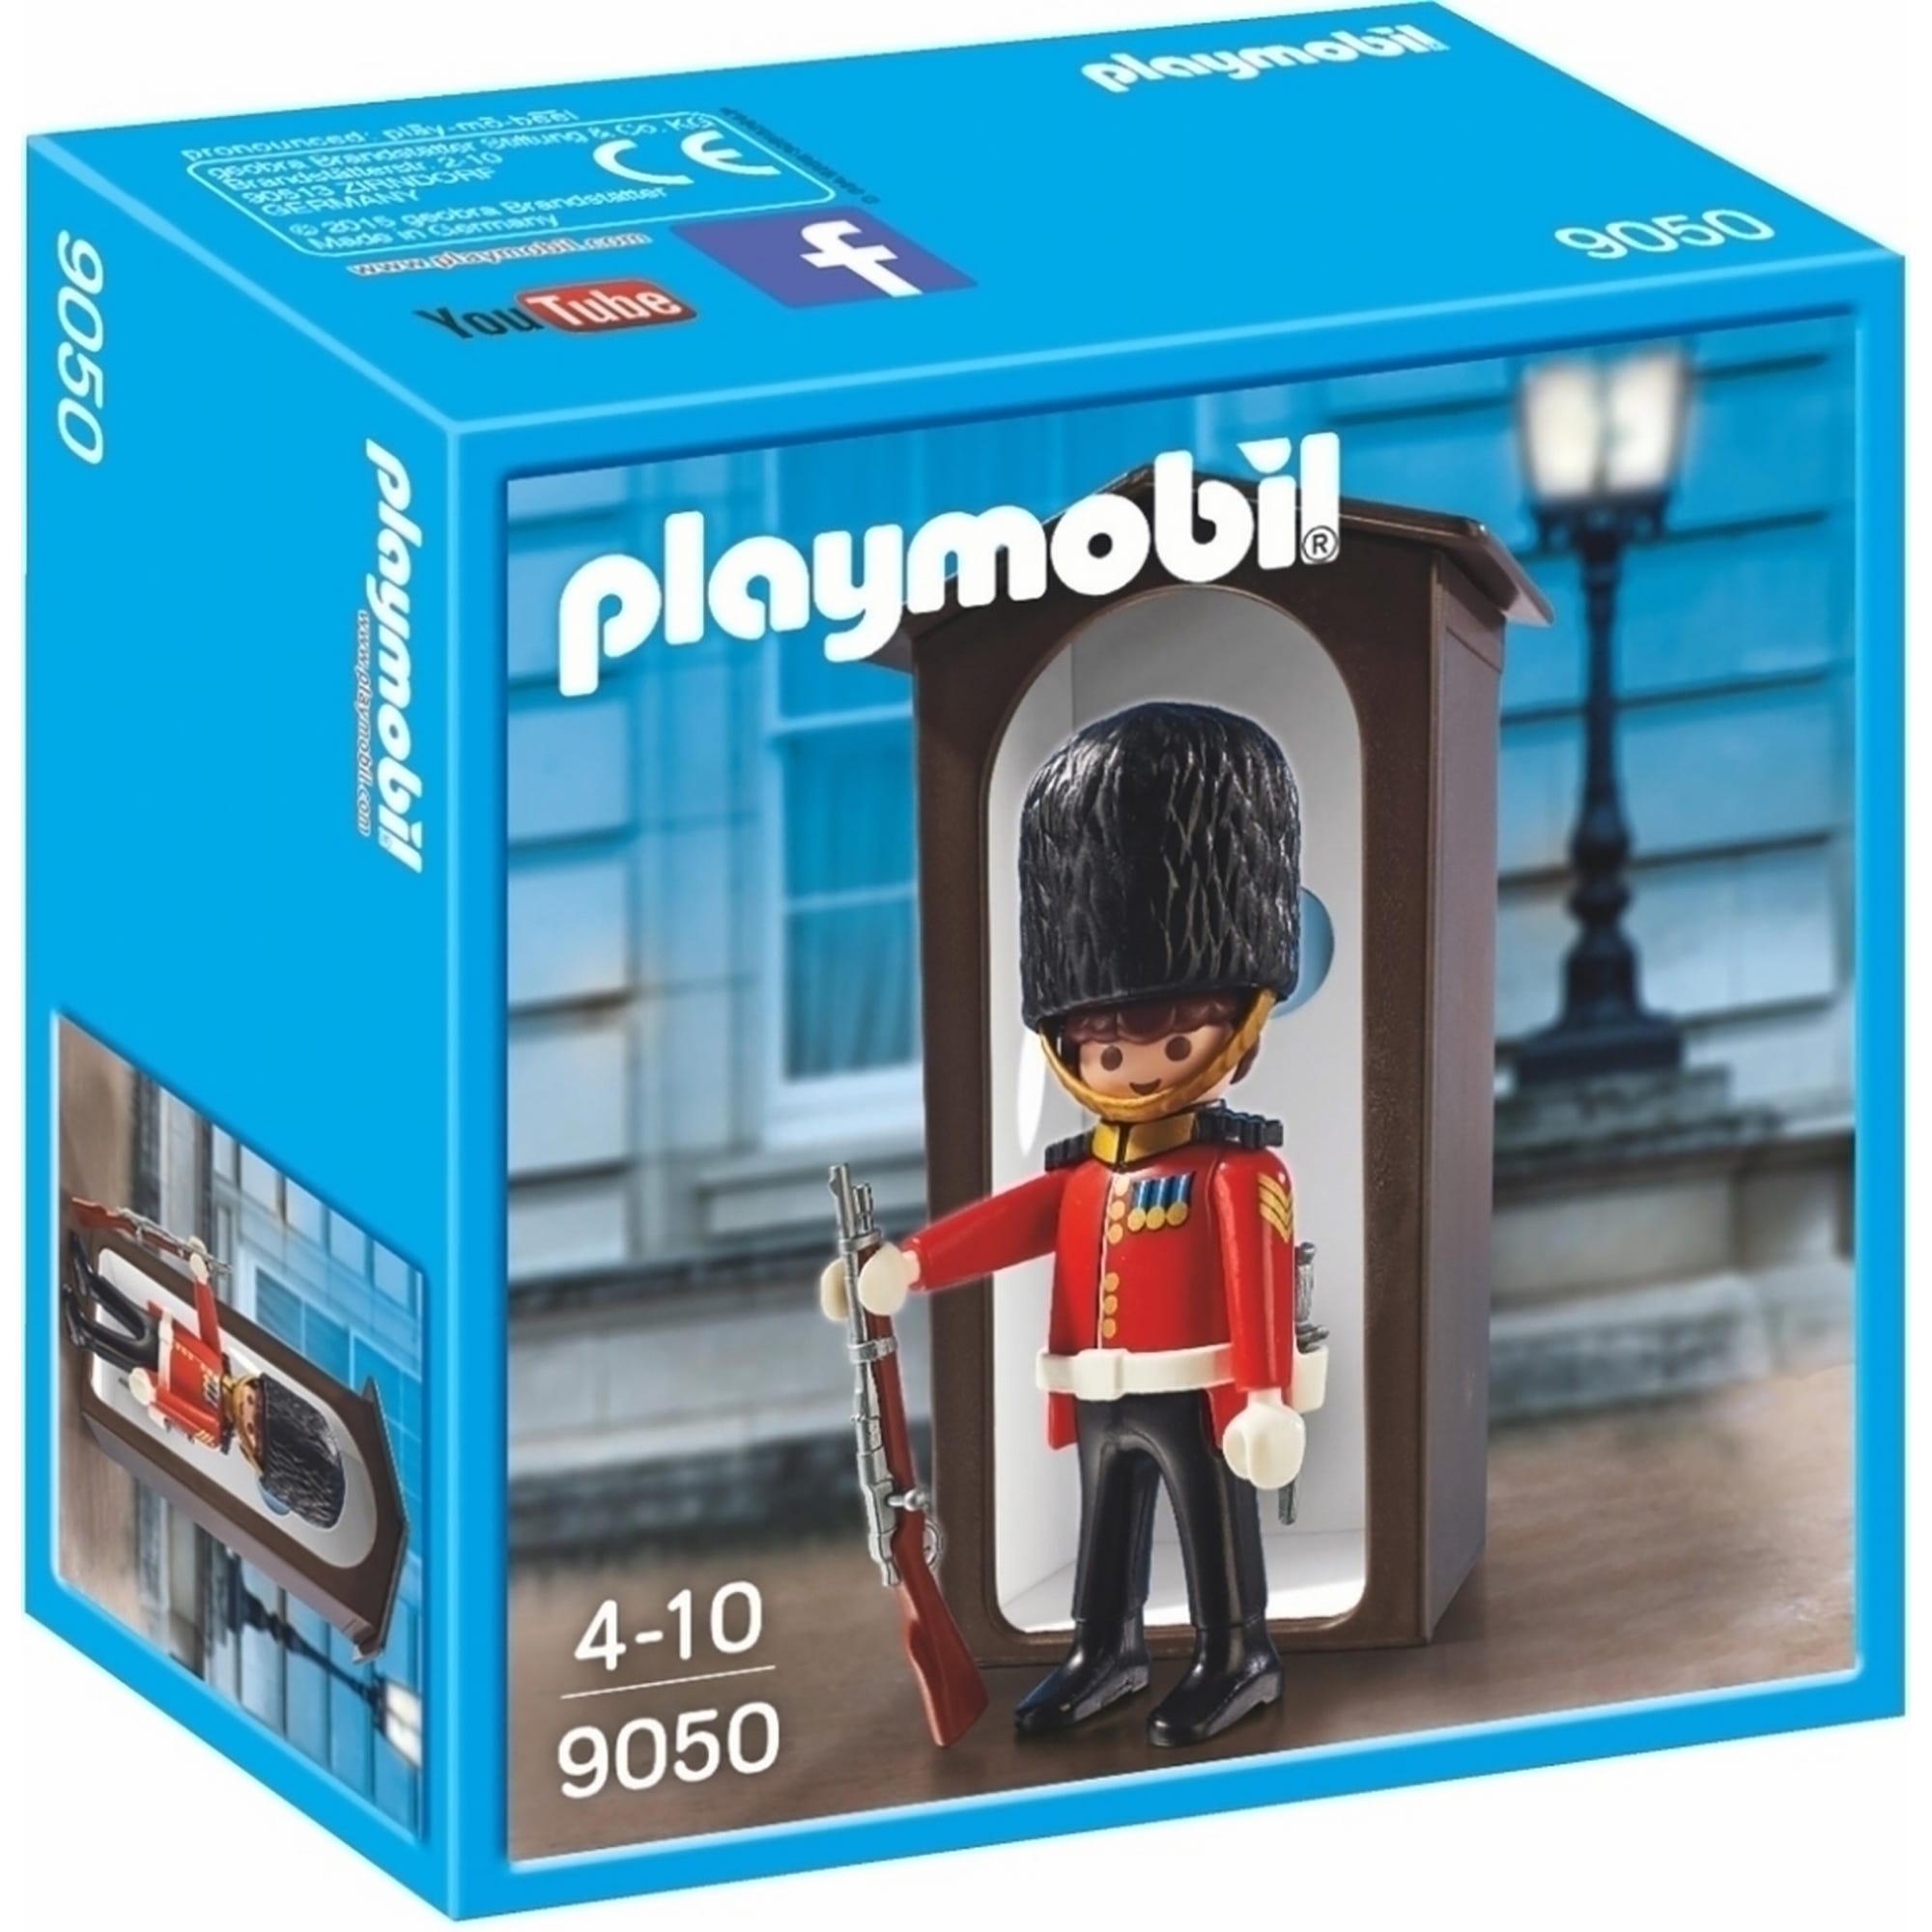 Playmobil 9237 Police Bobby UK Neu & OVP 9050 Royal Guard Sentry Box 